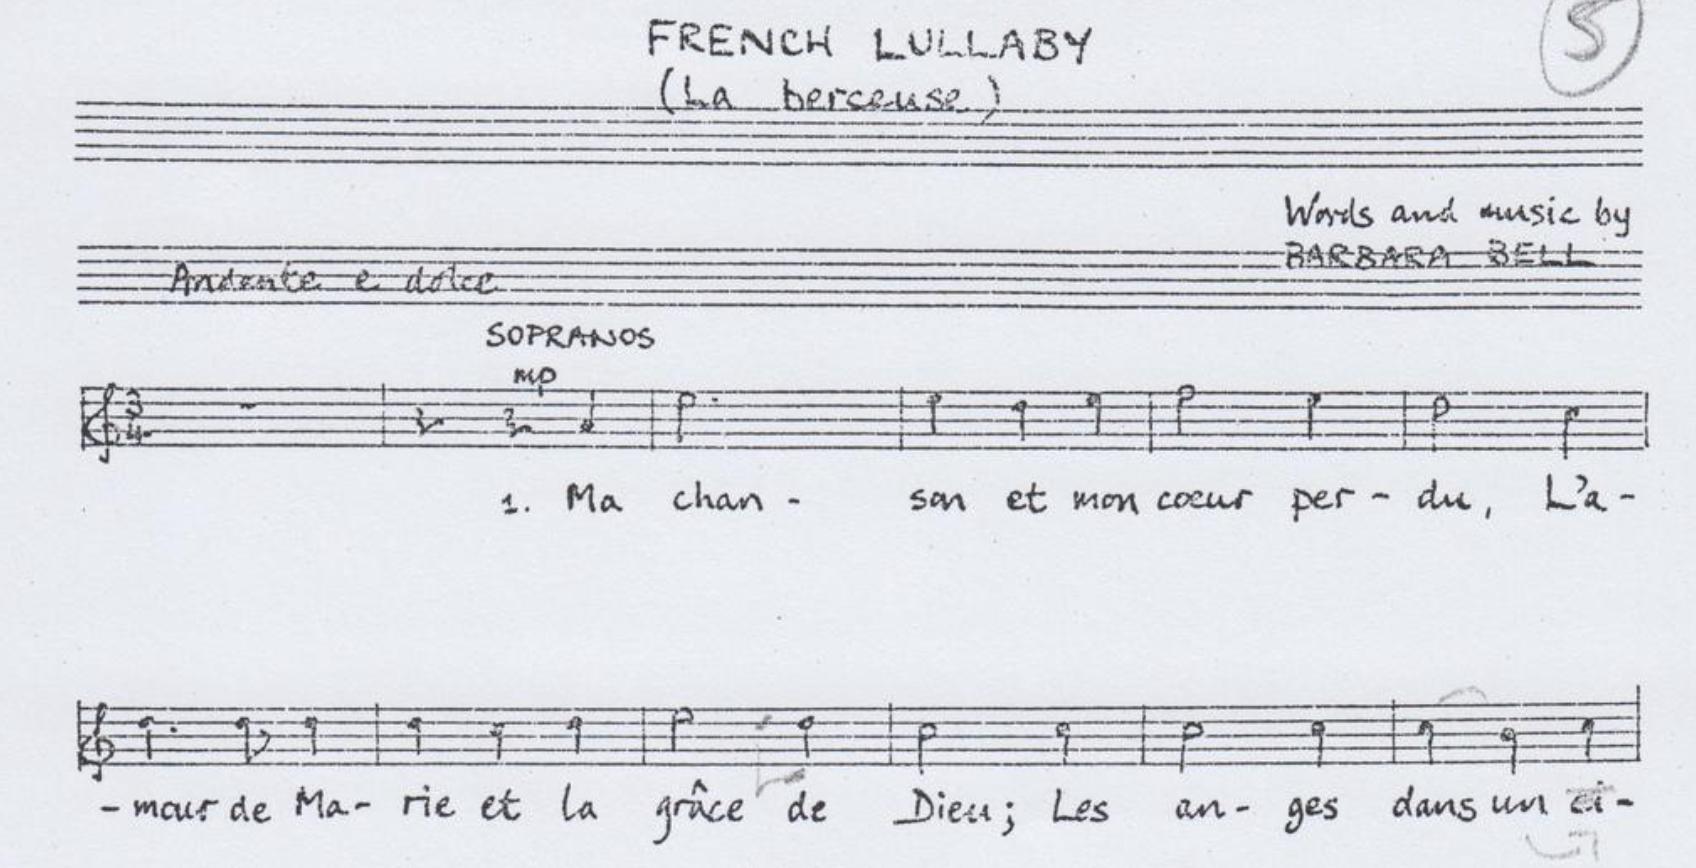 French Lullaby carol Barbara Bell Rutter